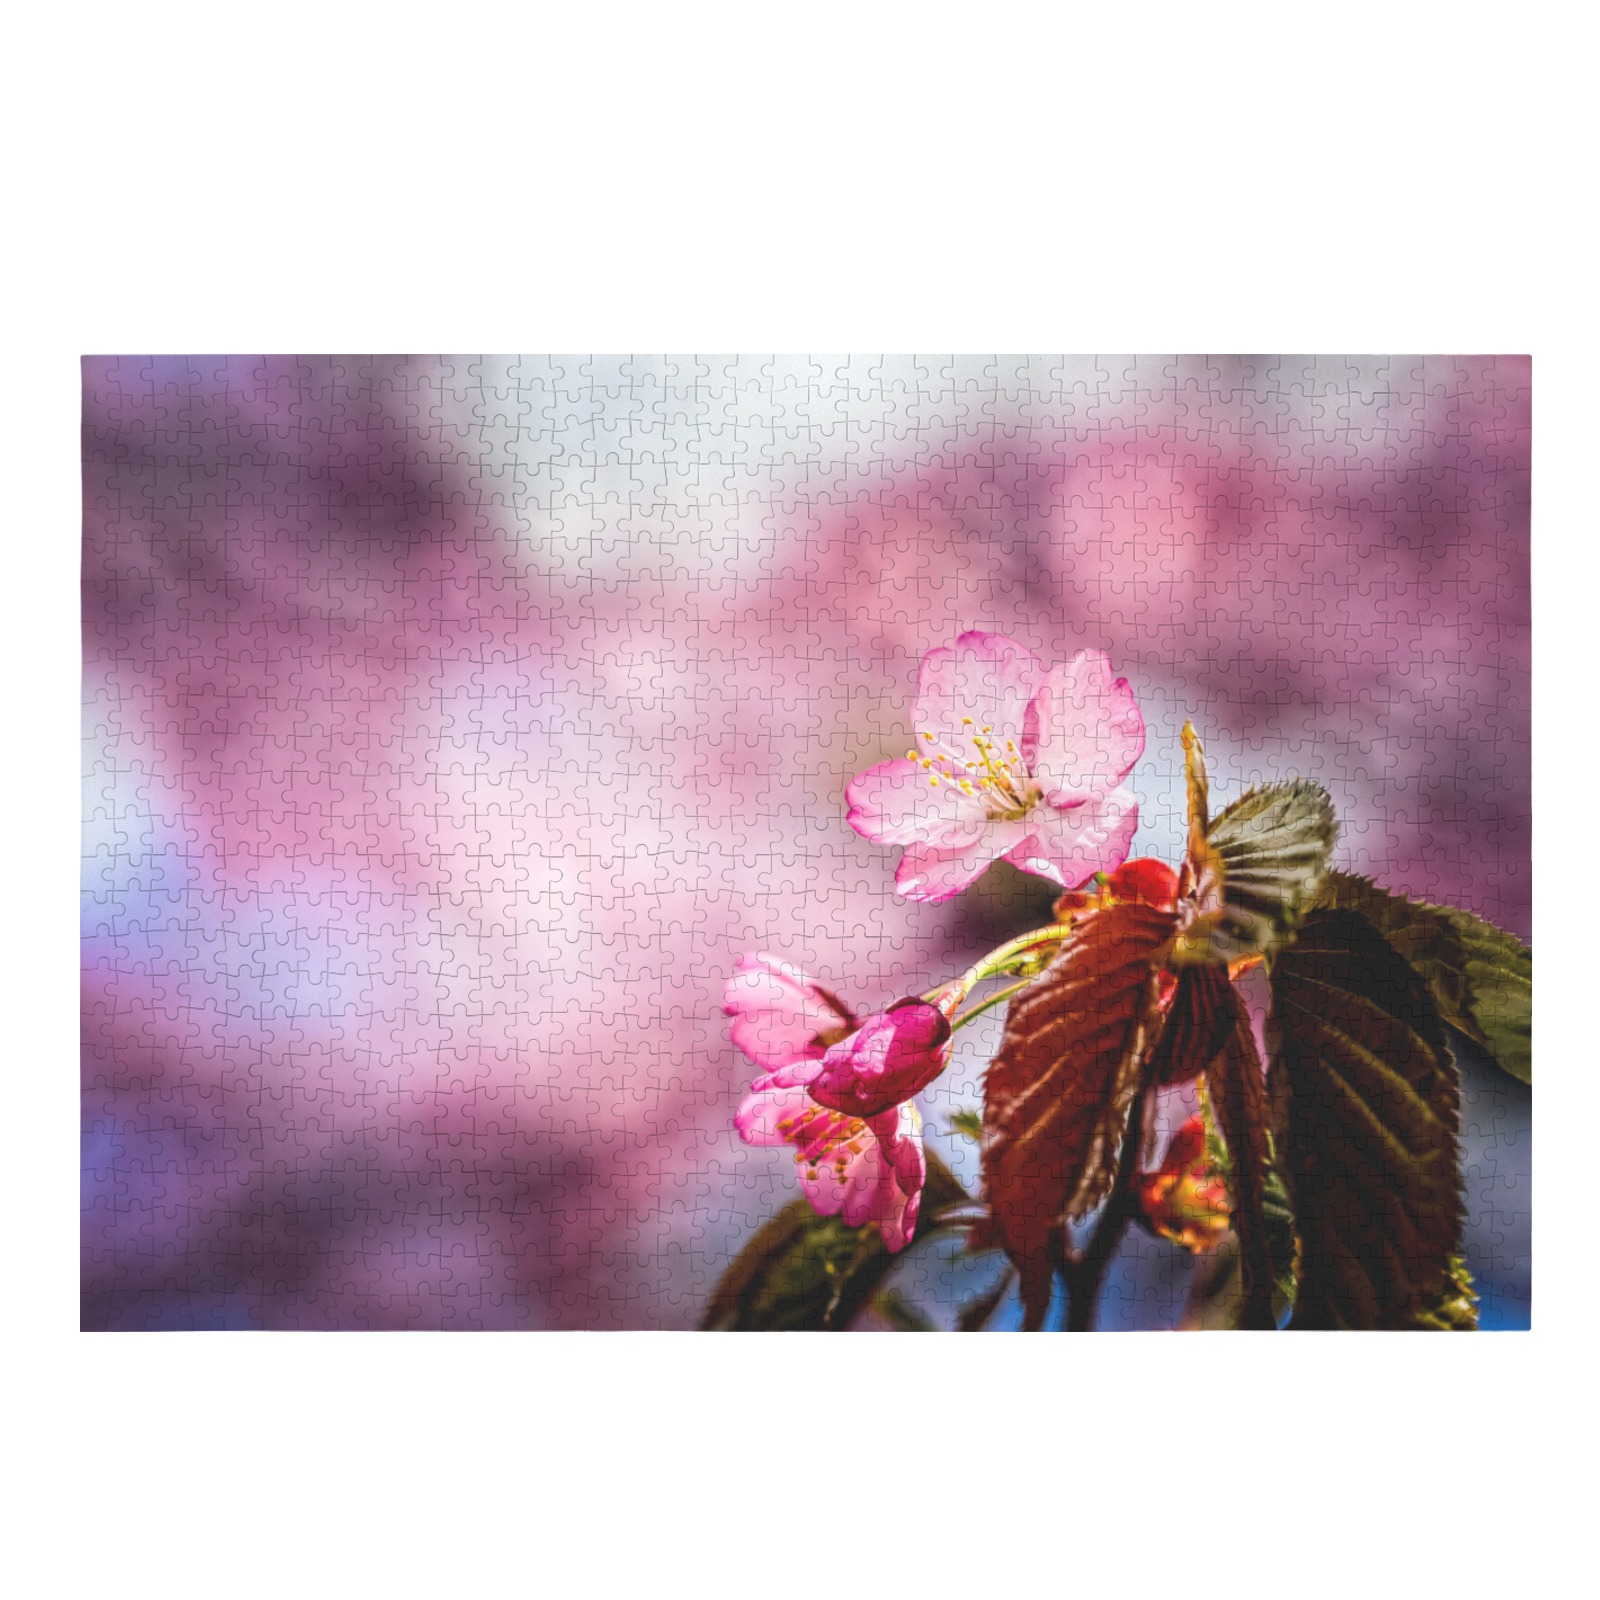 Striking pink sakura cherry flowers, pink mist. 1000-Piece Wooden Jigsaw Puzzle (Horizontal)